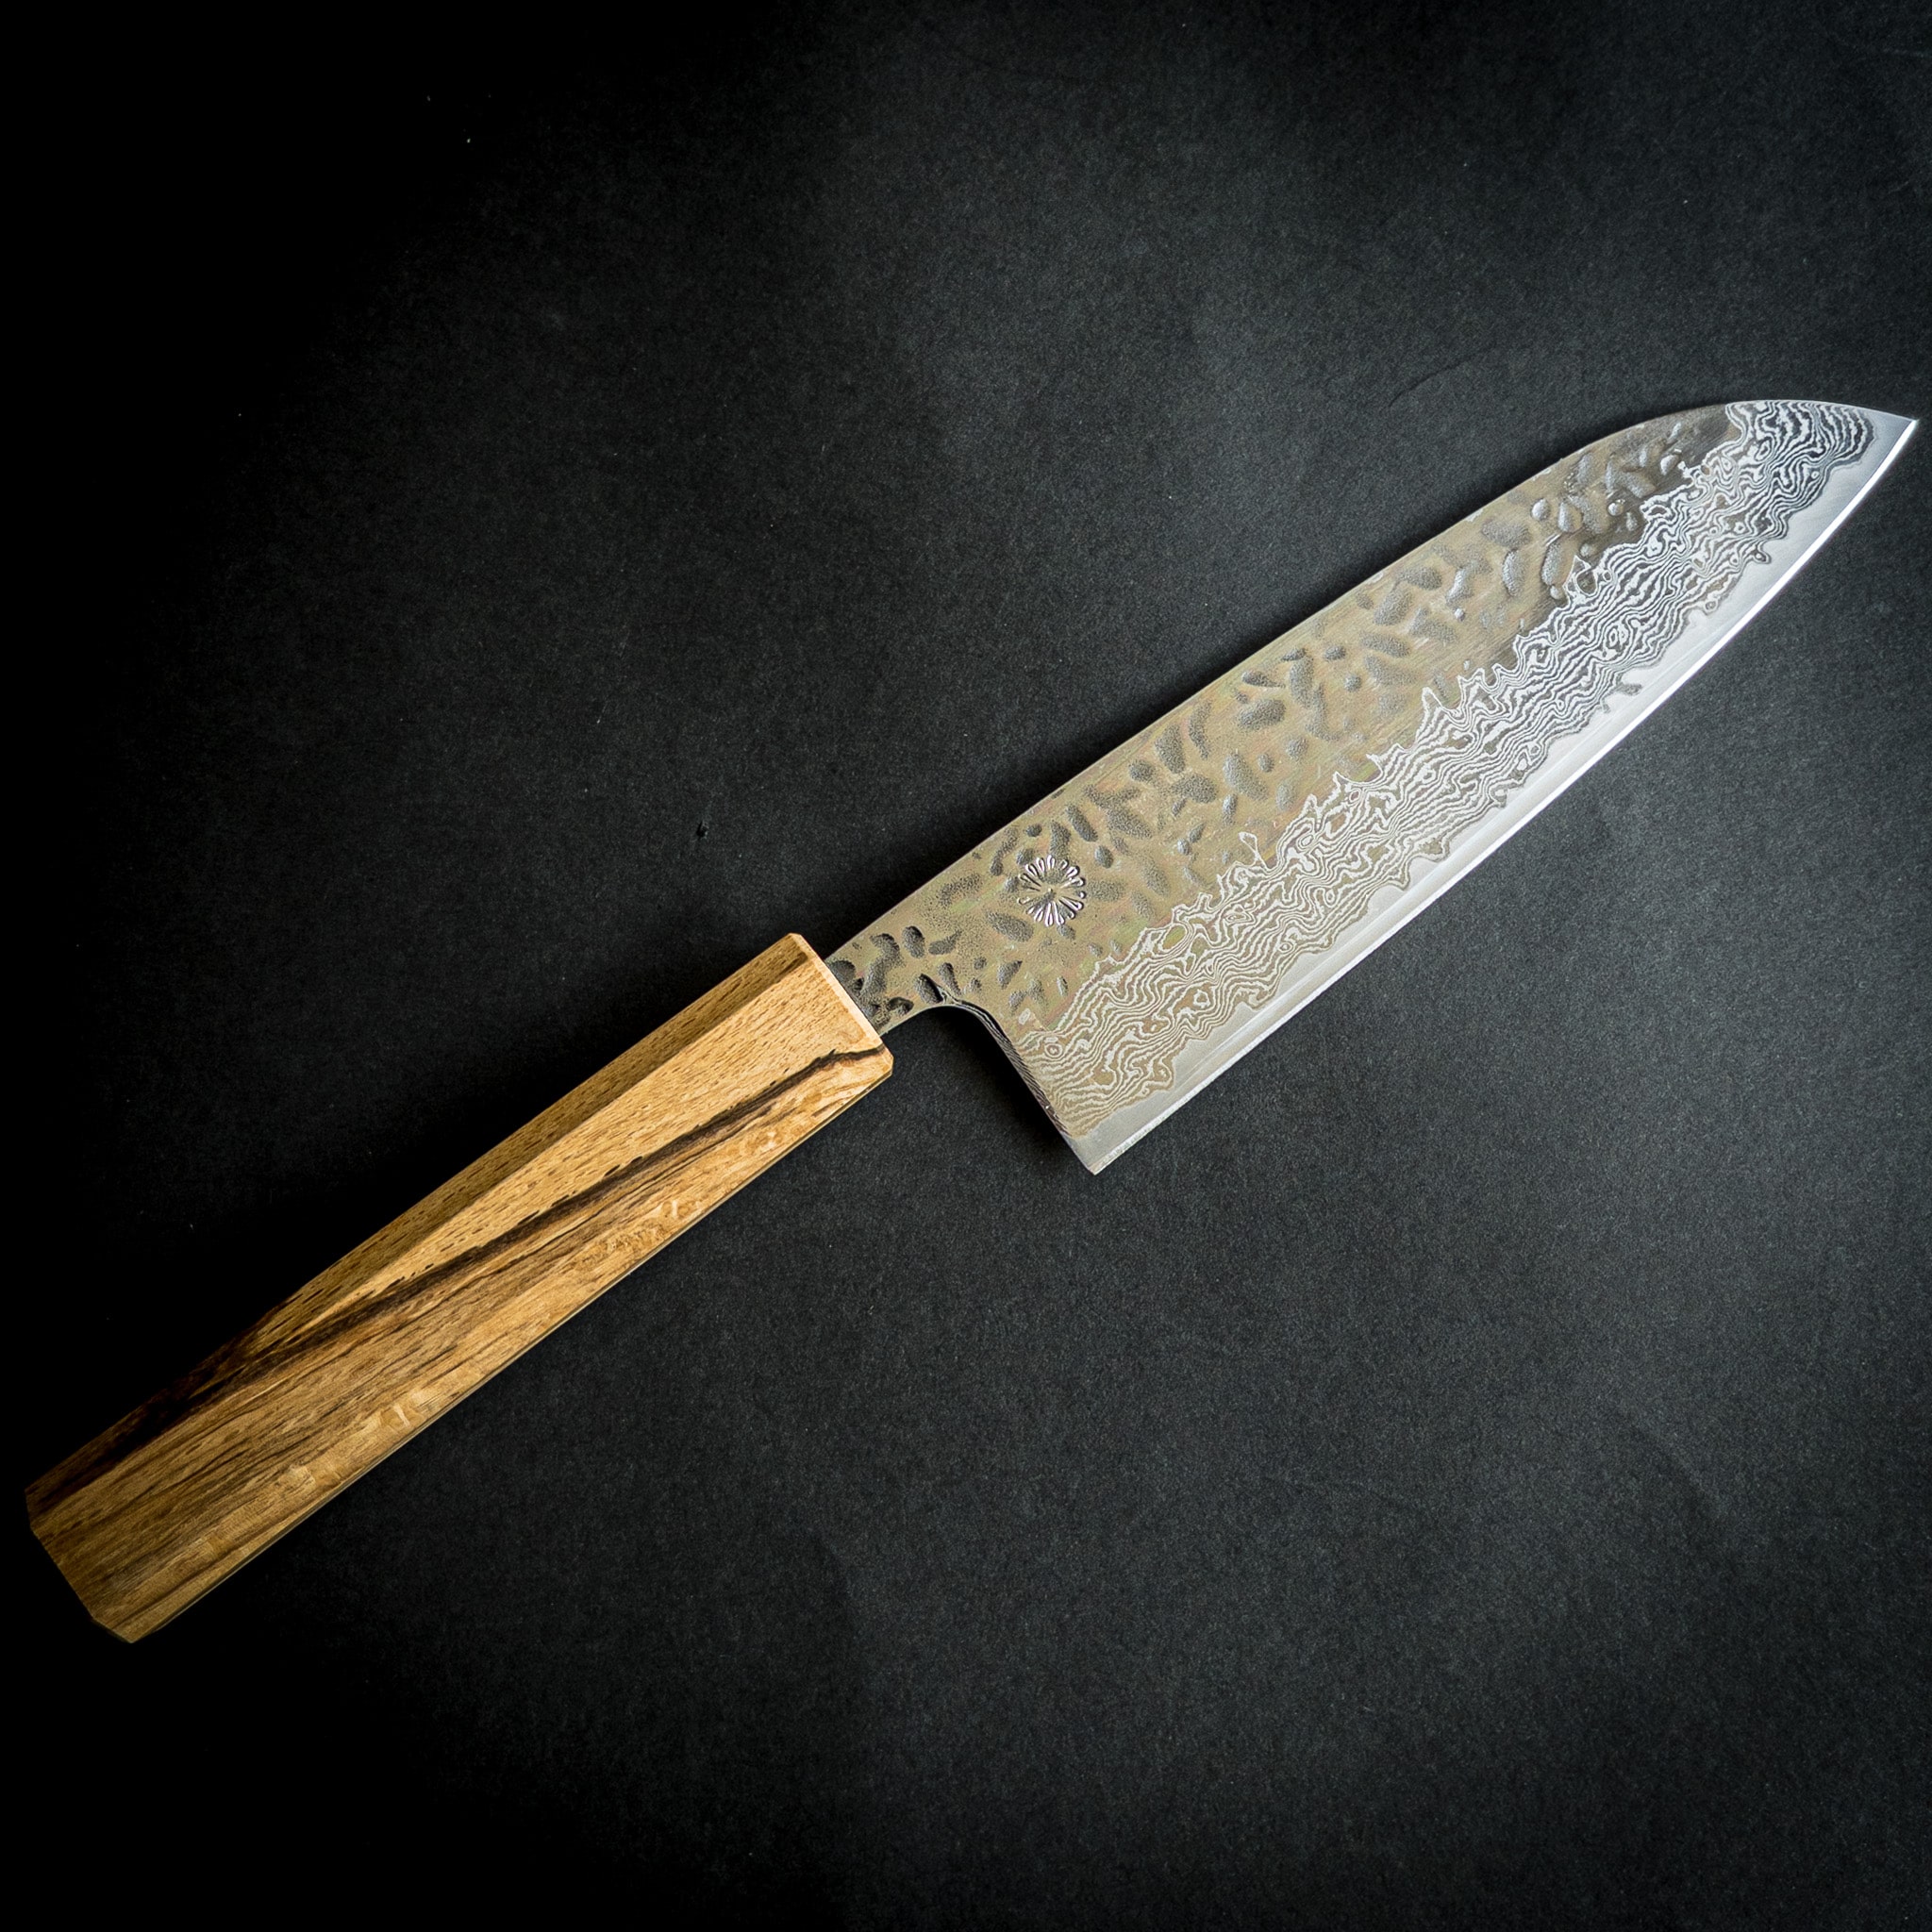 Kirosaku Santoku Premium Damascus Knife - 18cm Sharp Chef's Knife